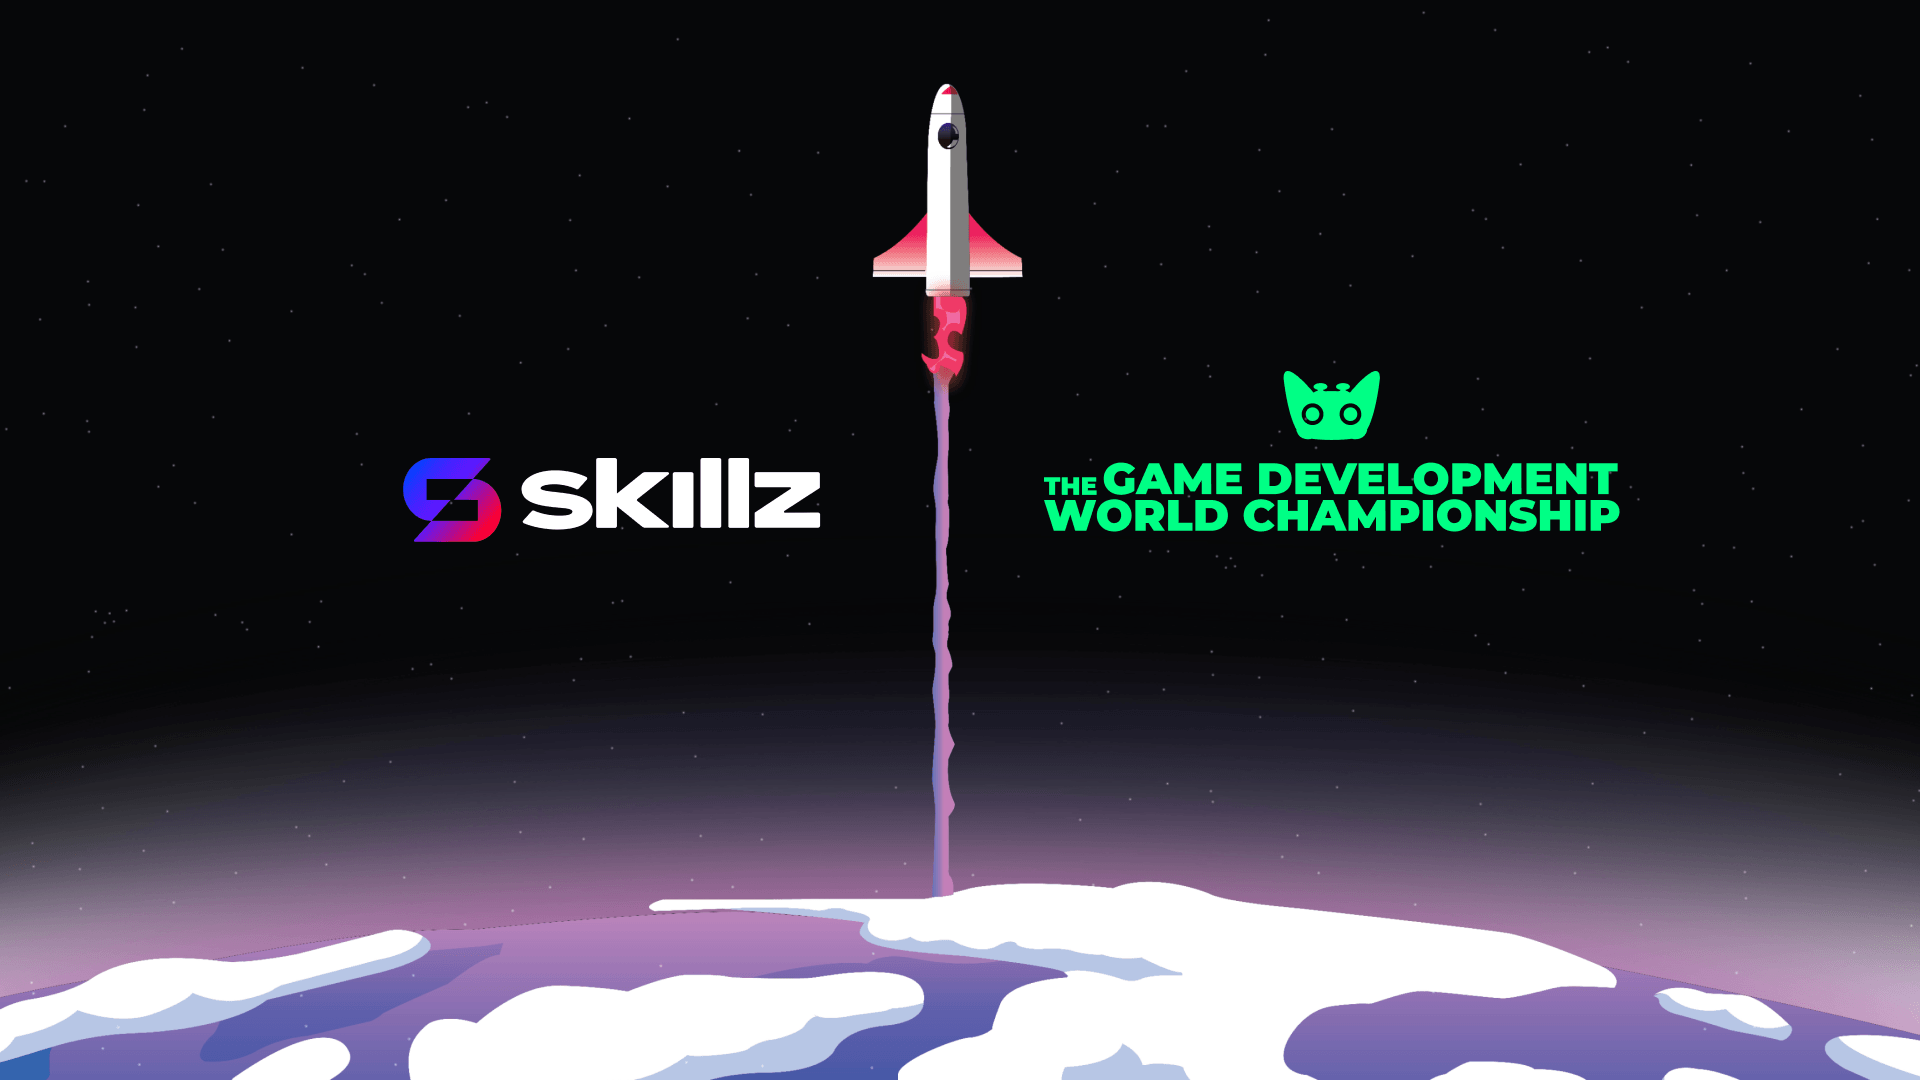 Category: World Championship 